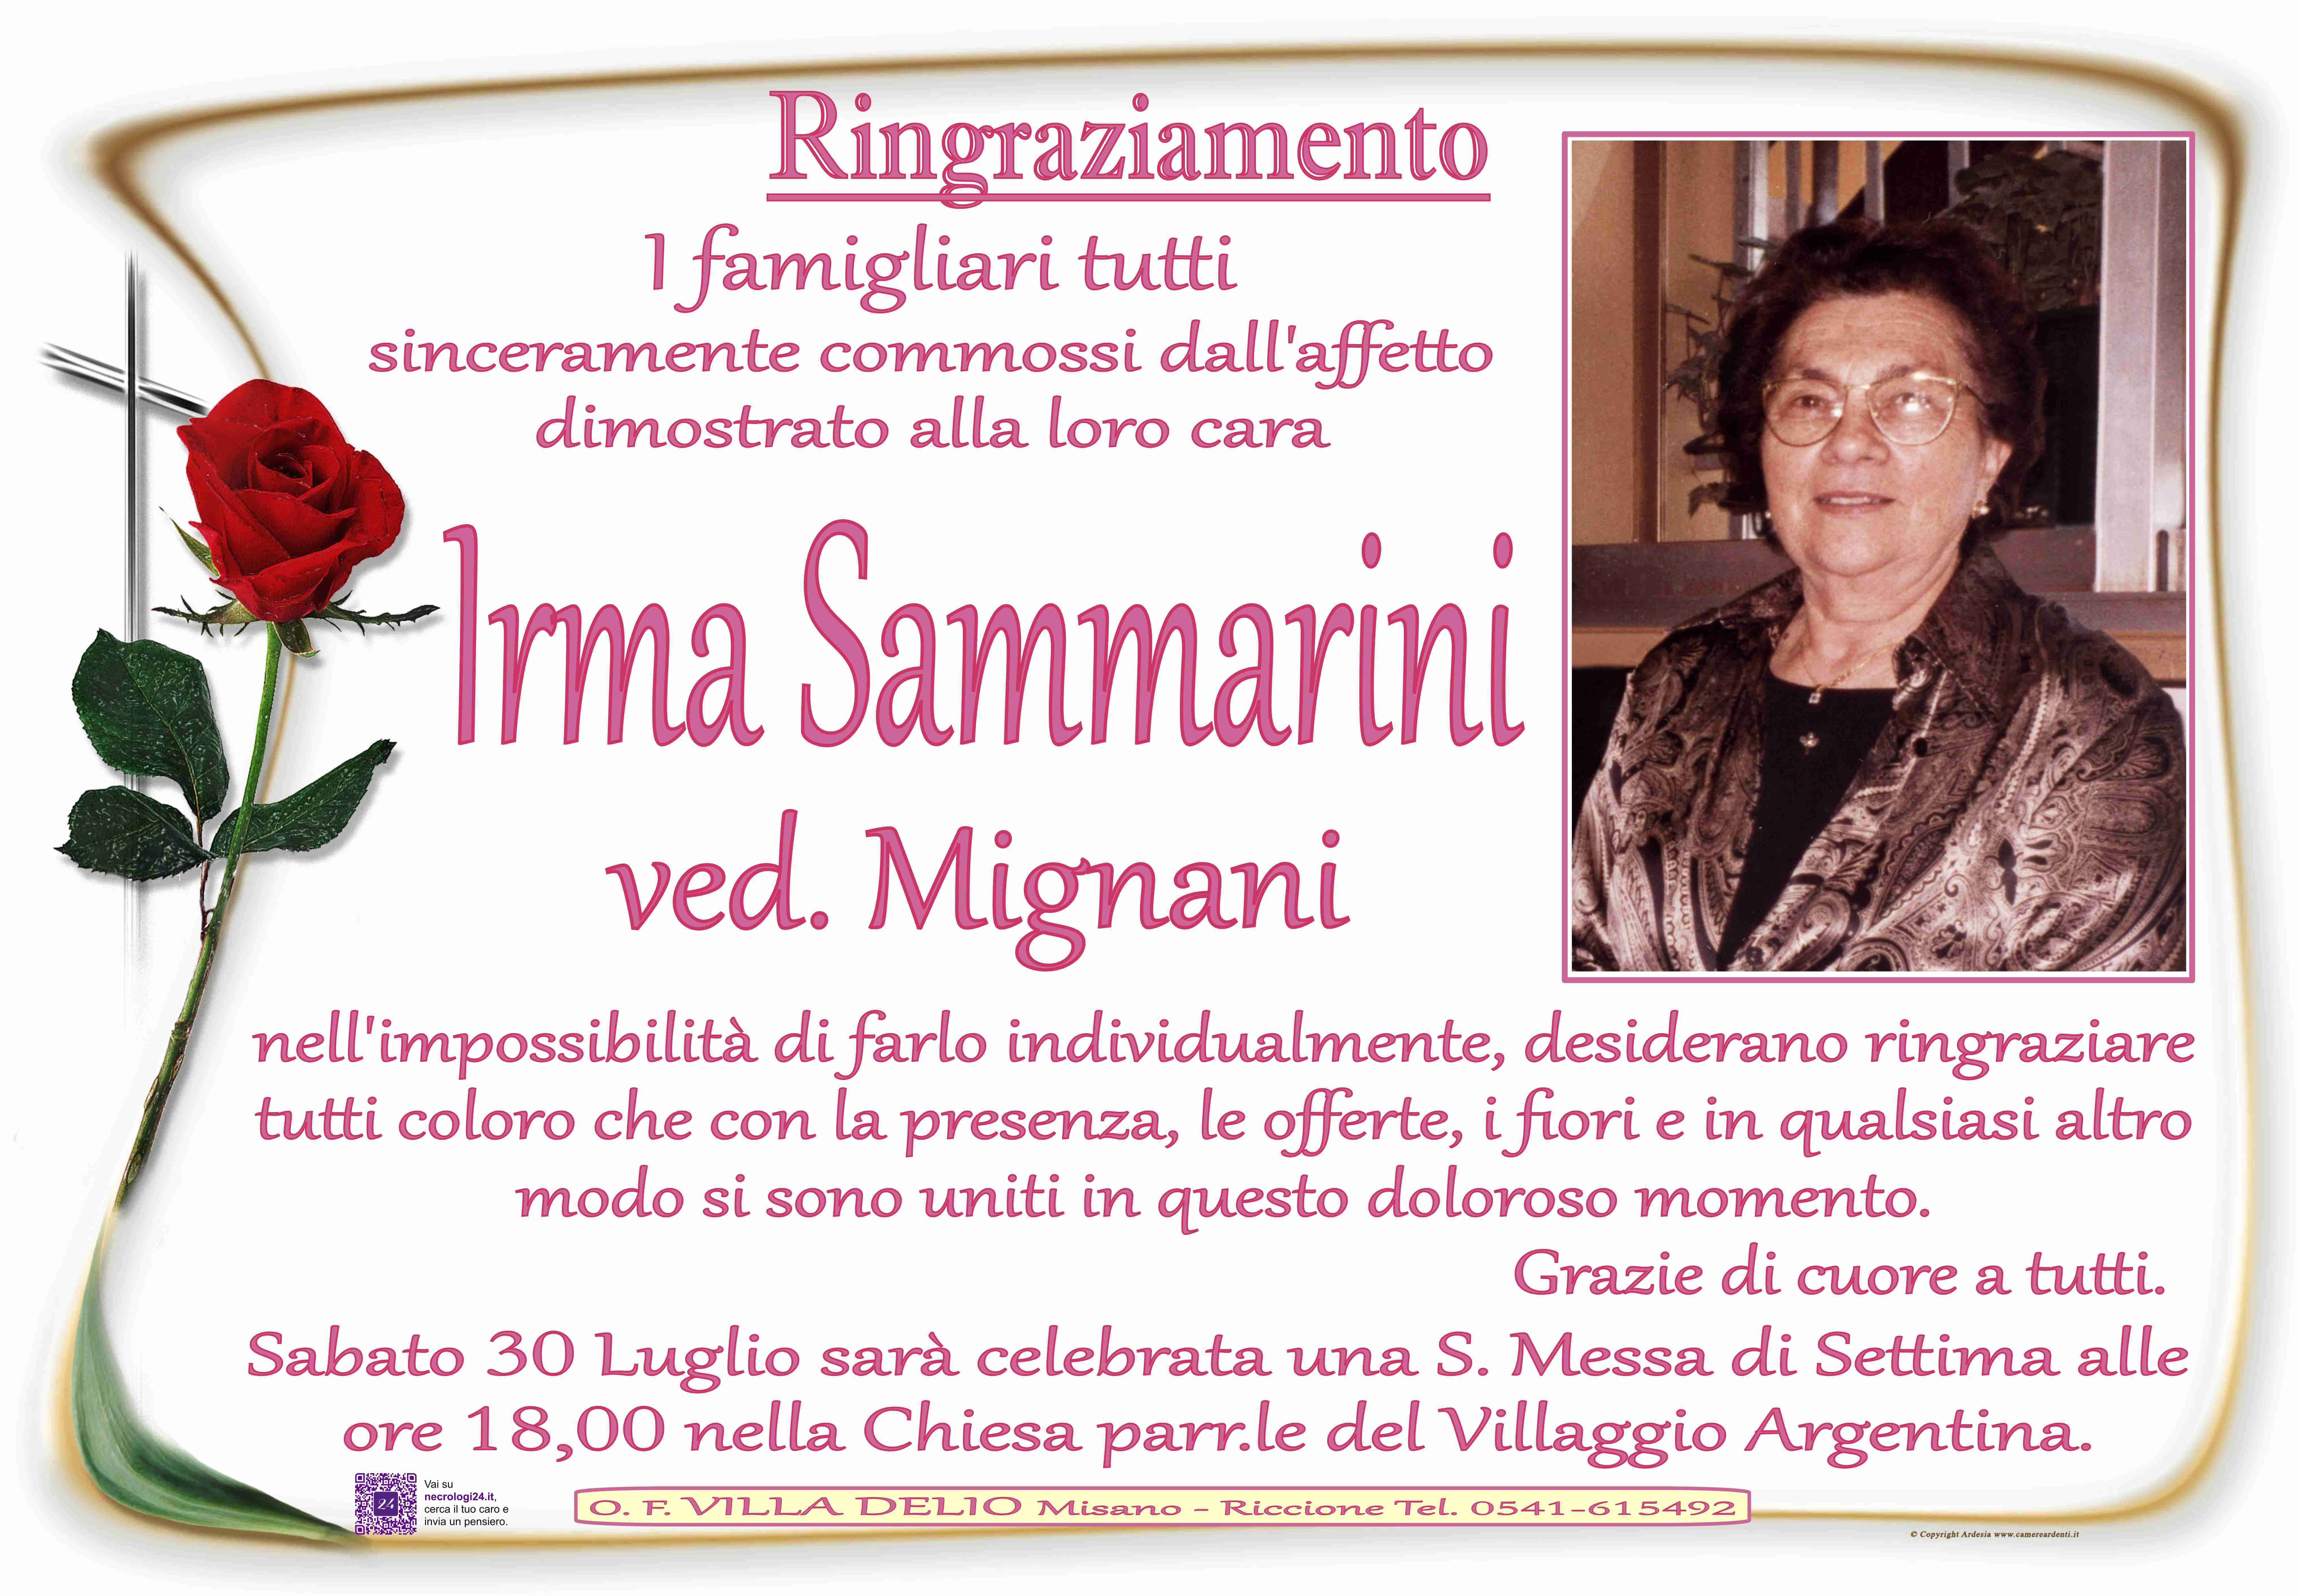 Irma Sammarini